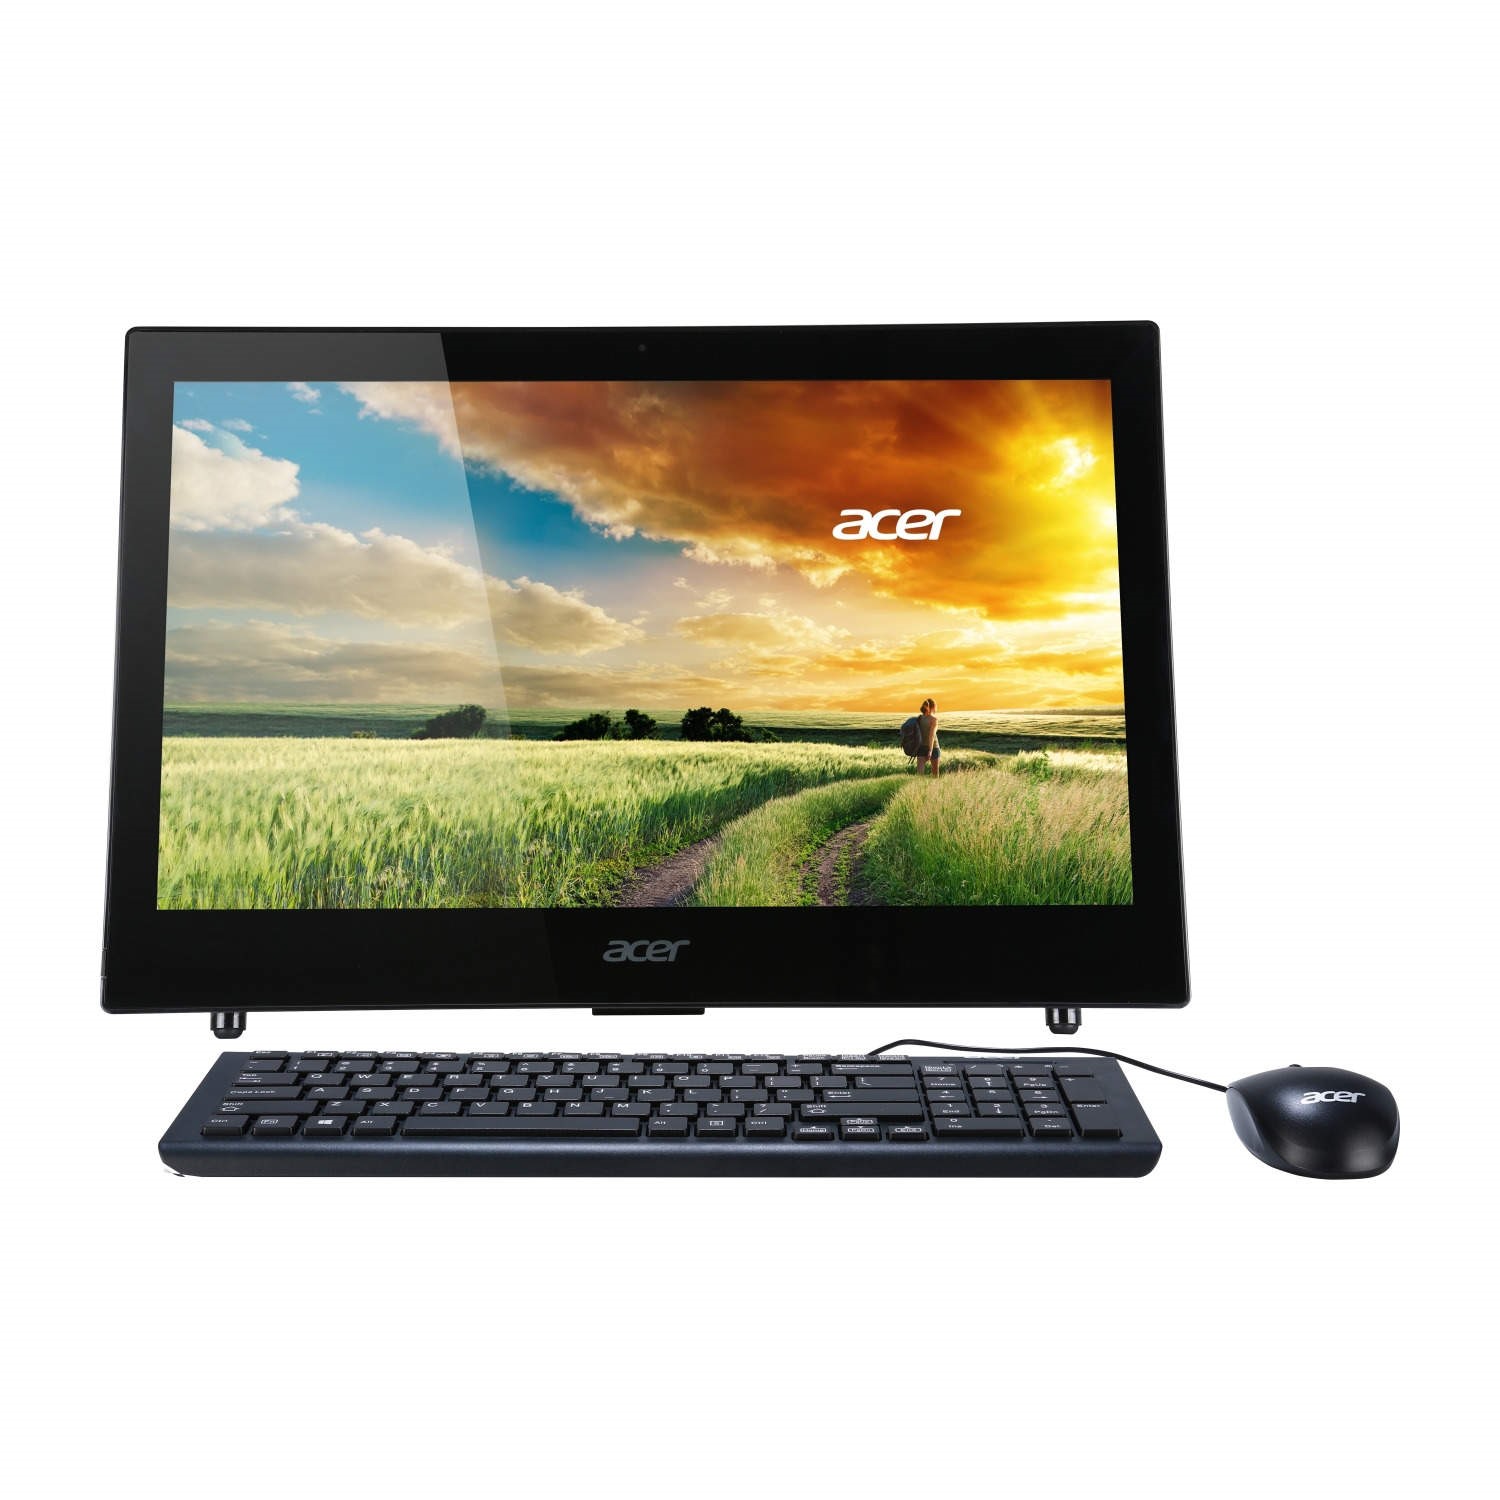 Acer Aspire ZC-606. Моноблок Acer Aspire ZC-606 жёсткий диск. Desktop 19.5 Acer Aspire ZC-606 (DQ.surmc.006). Моноблок Acer ZC.